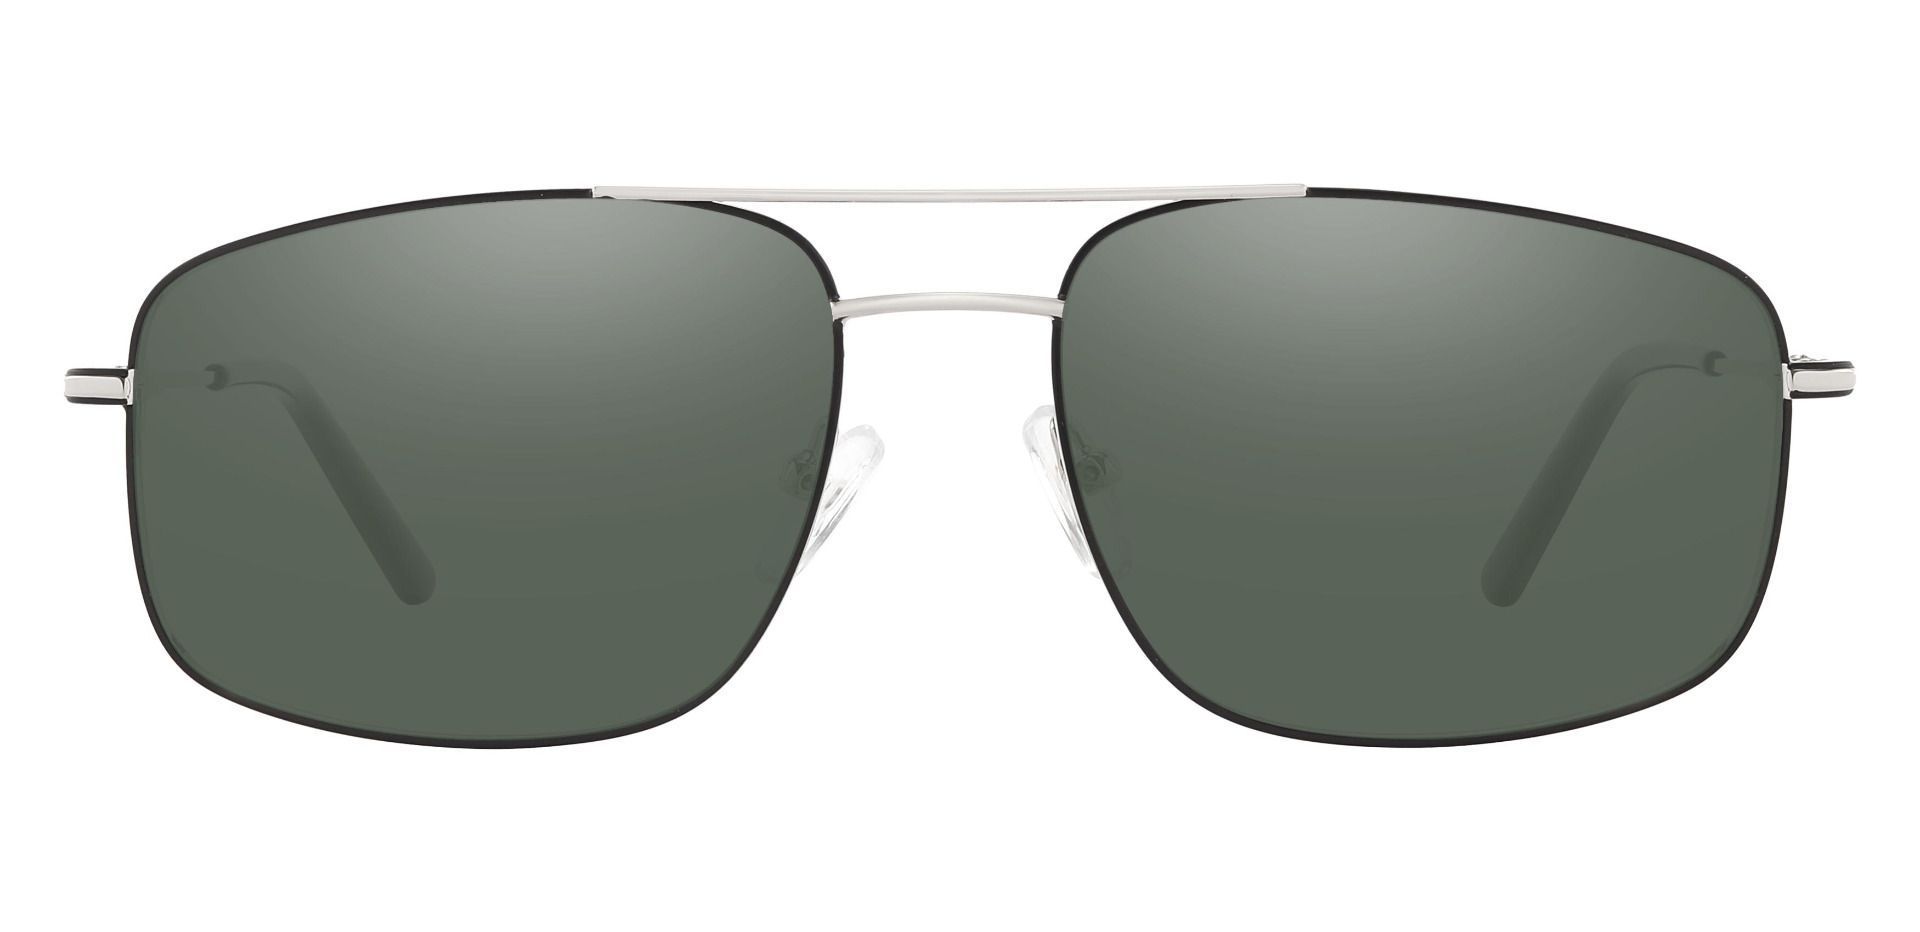 Turner Aviator Prescription Sunglasses - Silver Frame With Green Lenses